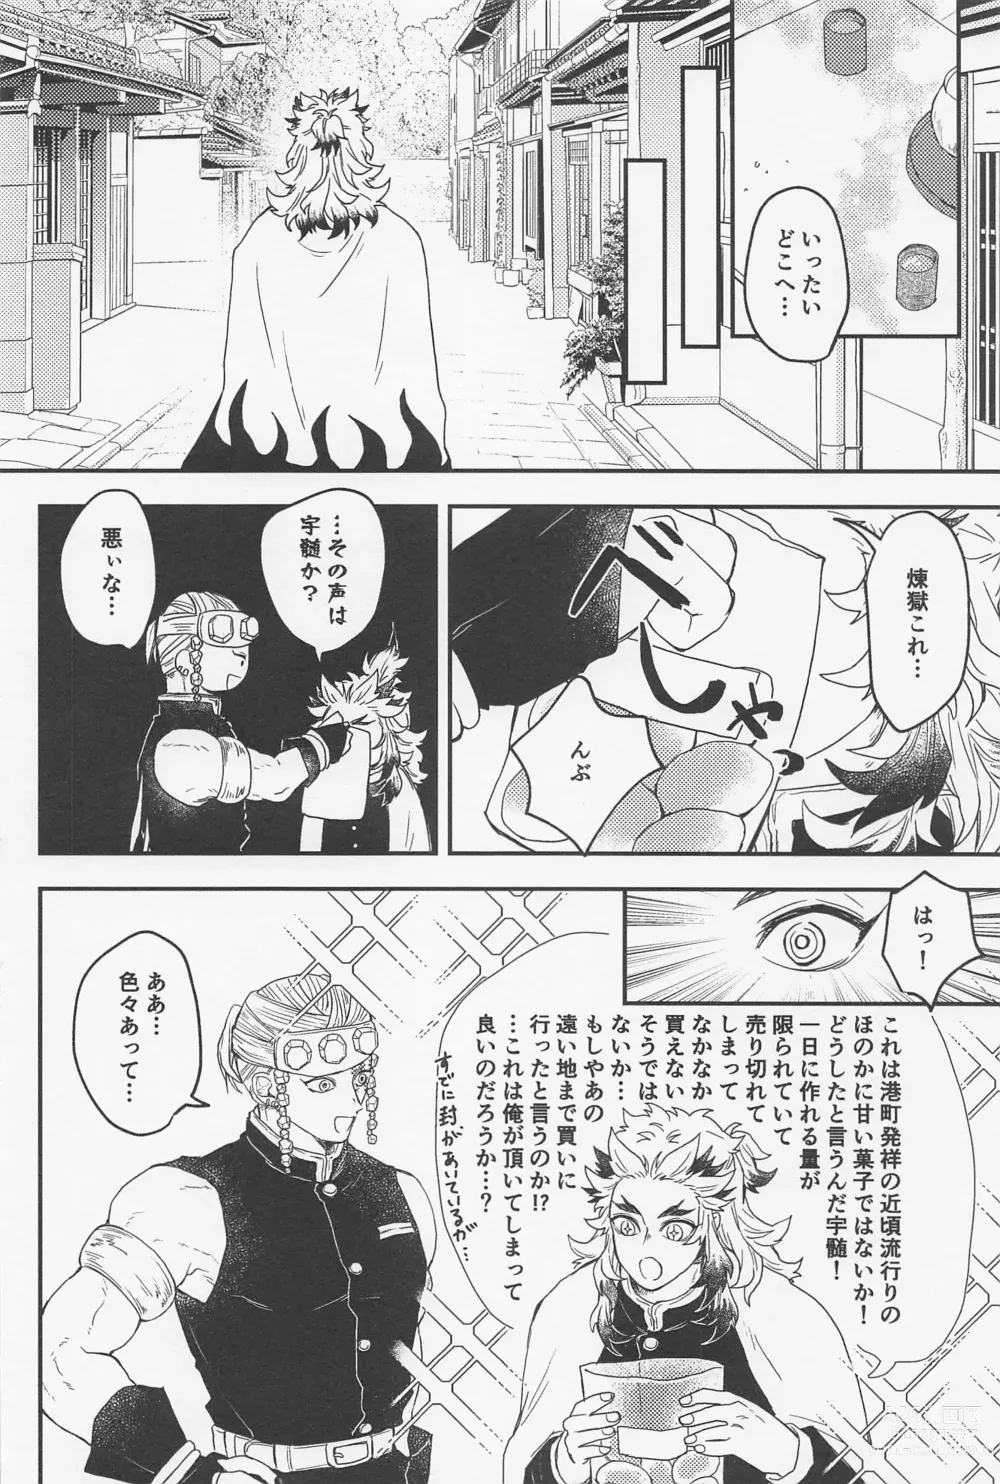 Page 29 of doujinshi Doushite Kounatta!?